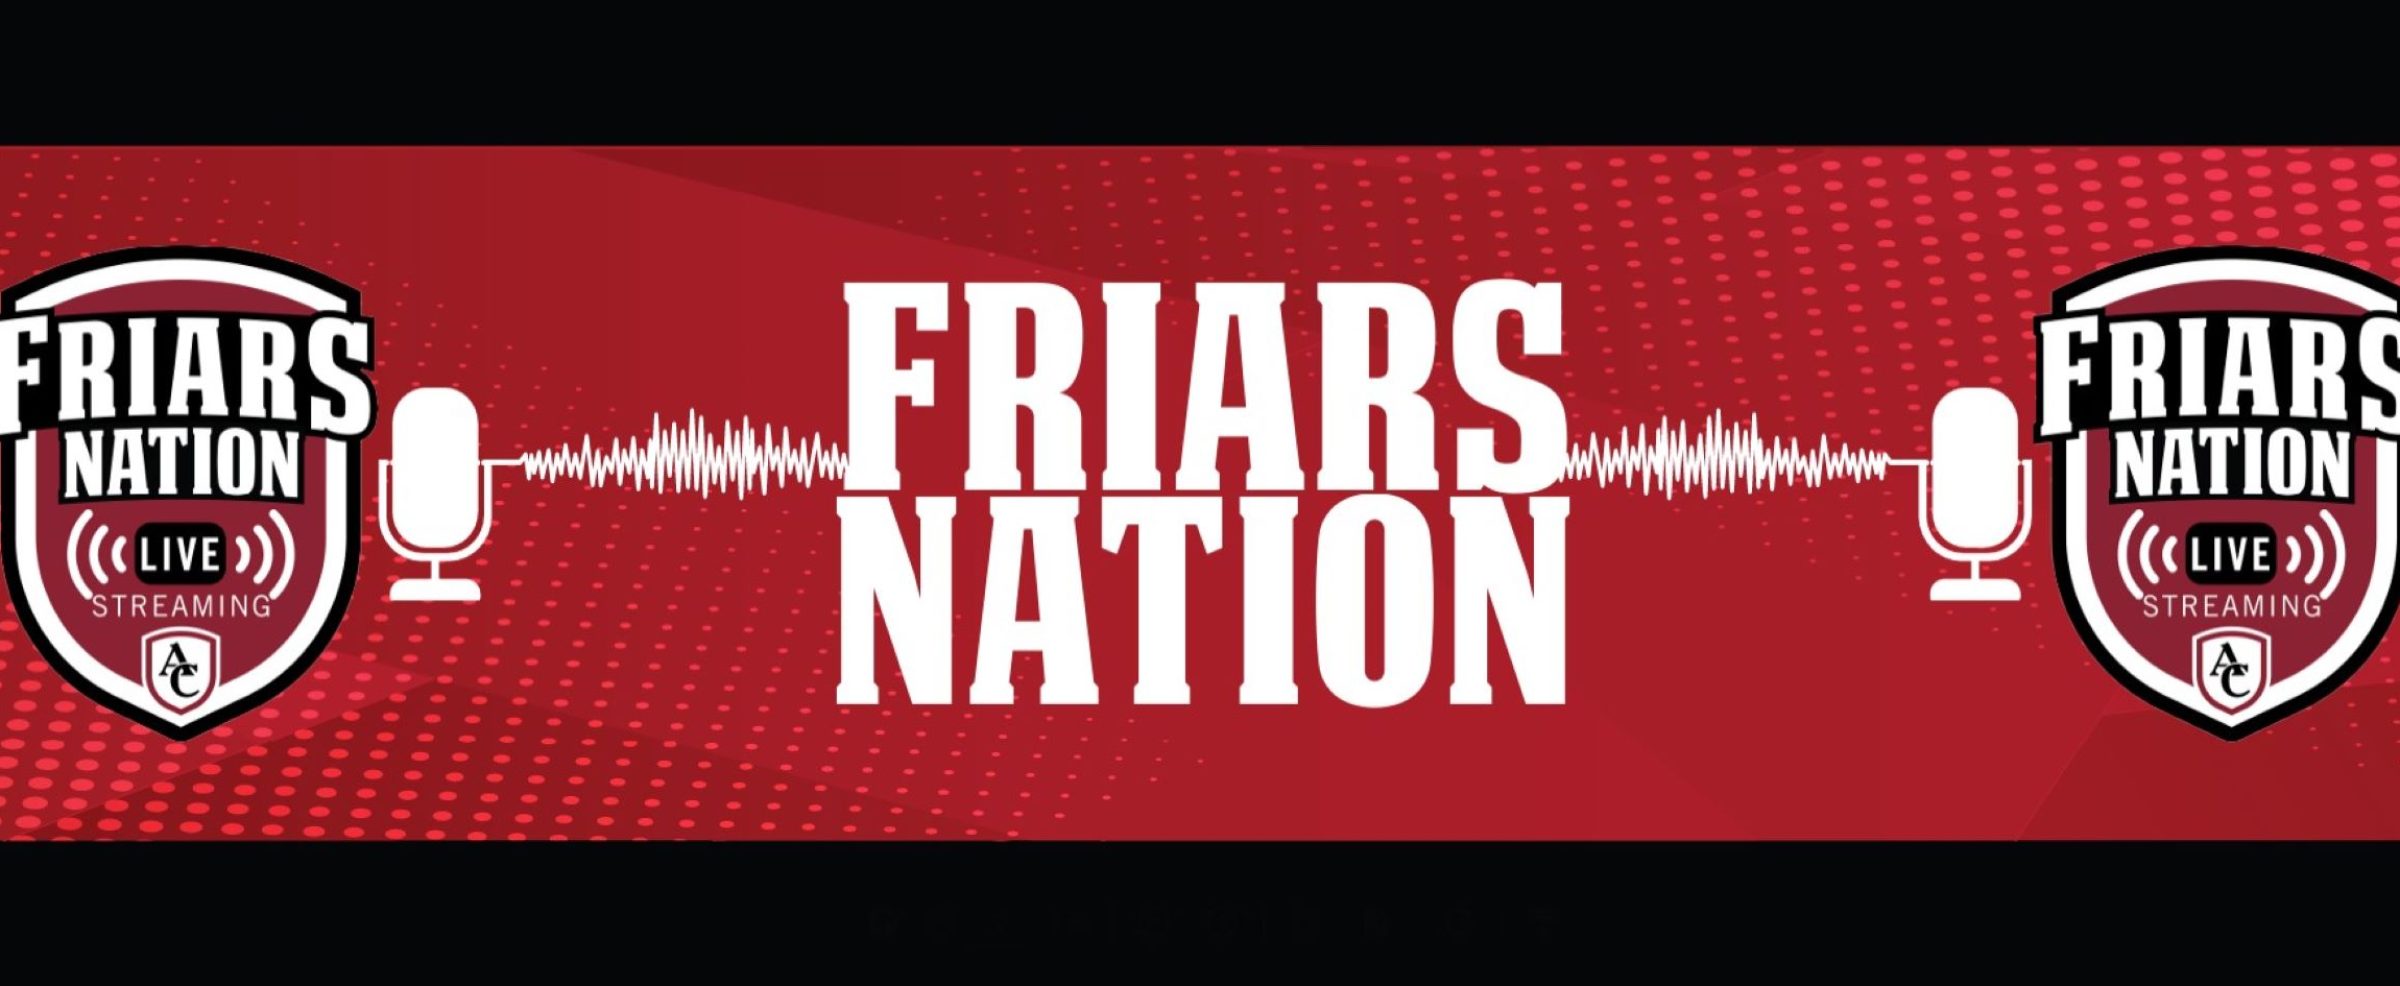 FRIARS NATION Live Stream